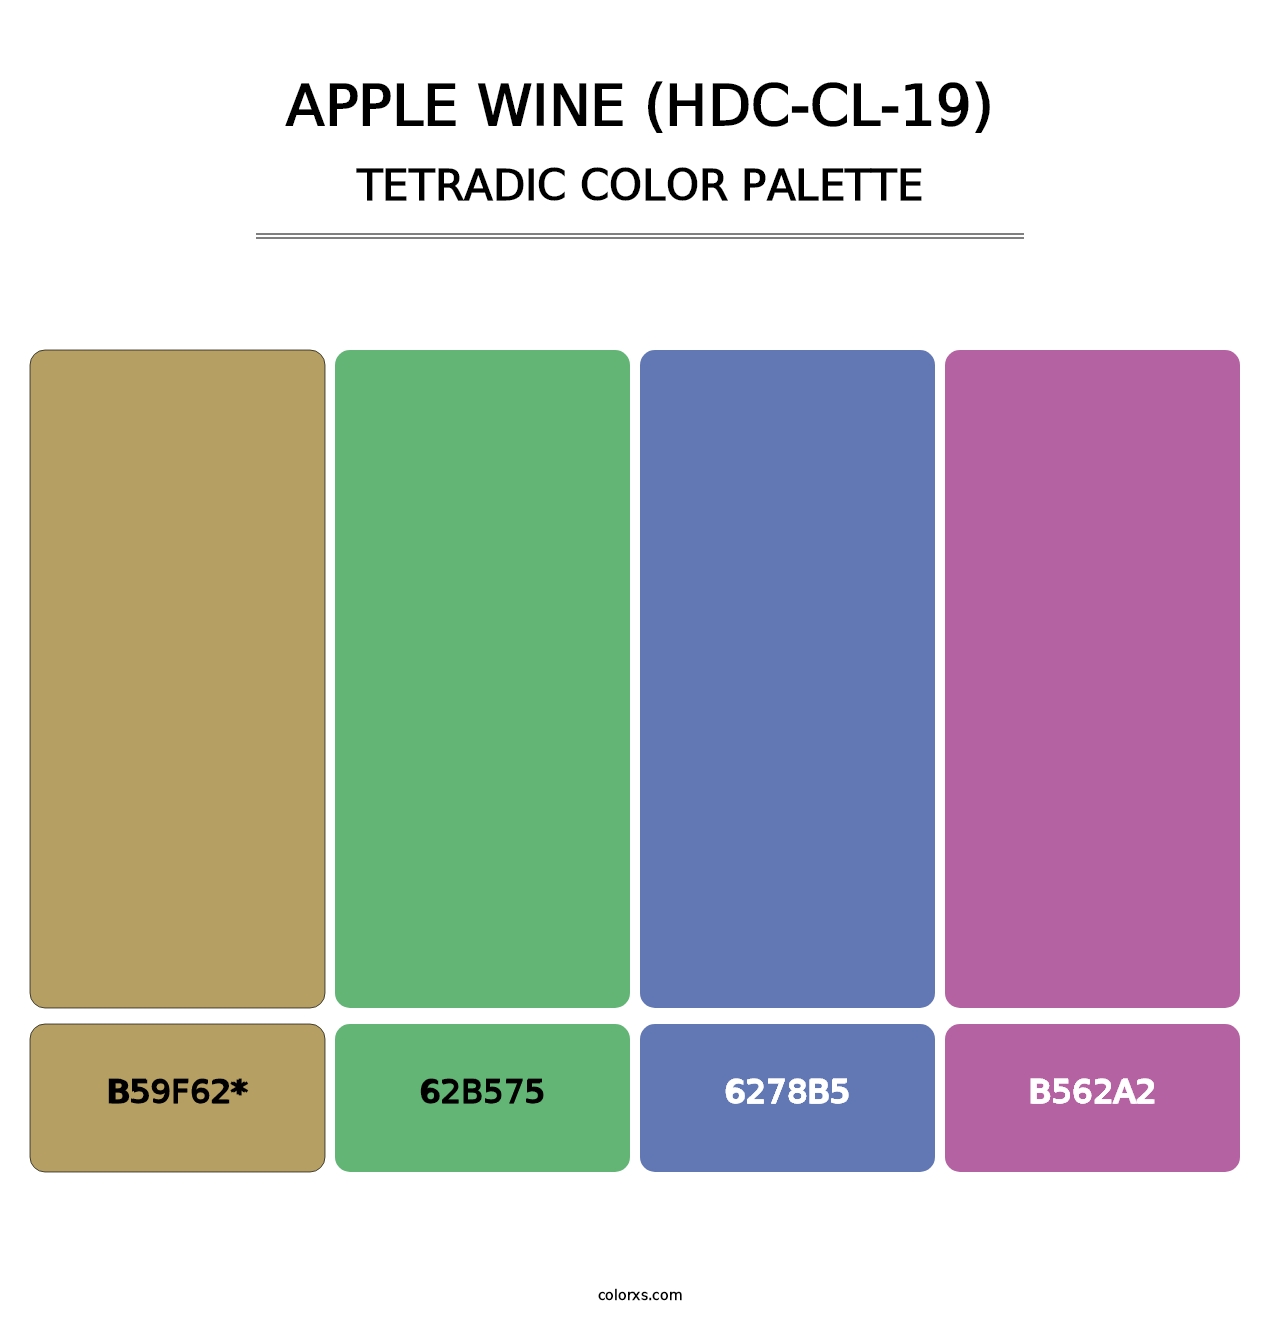 Apple Wine (HDC-CL-19) - Tetradic Color Palette